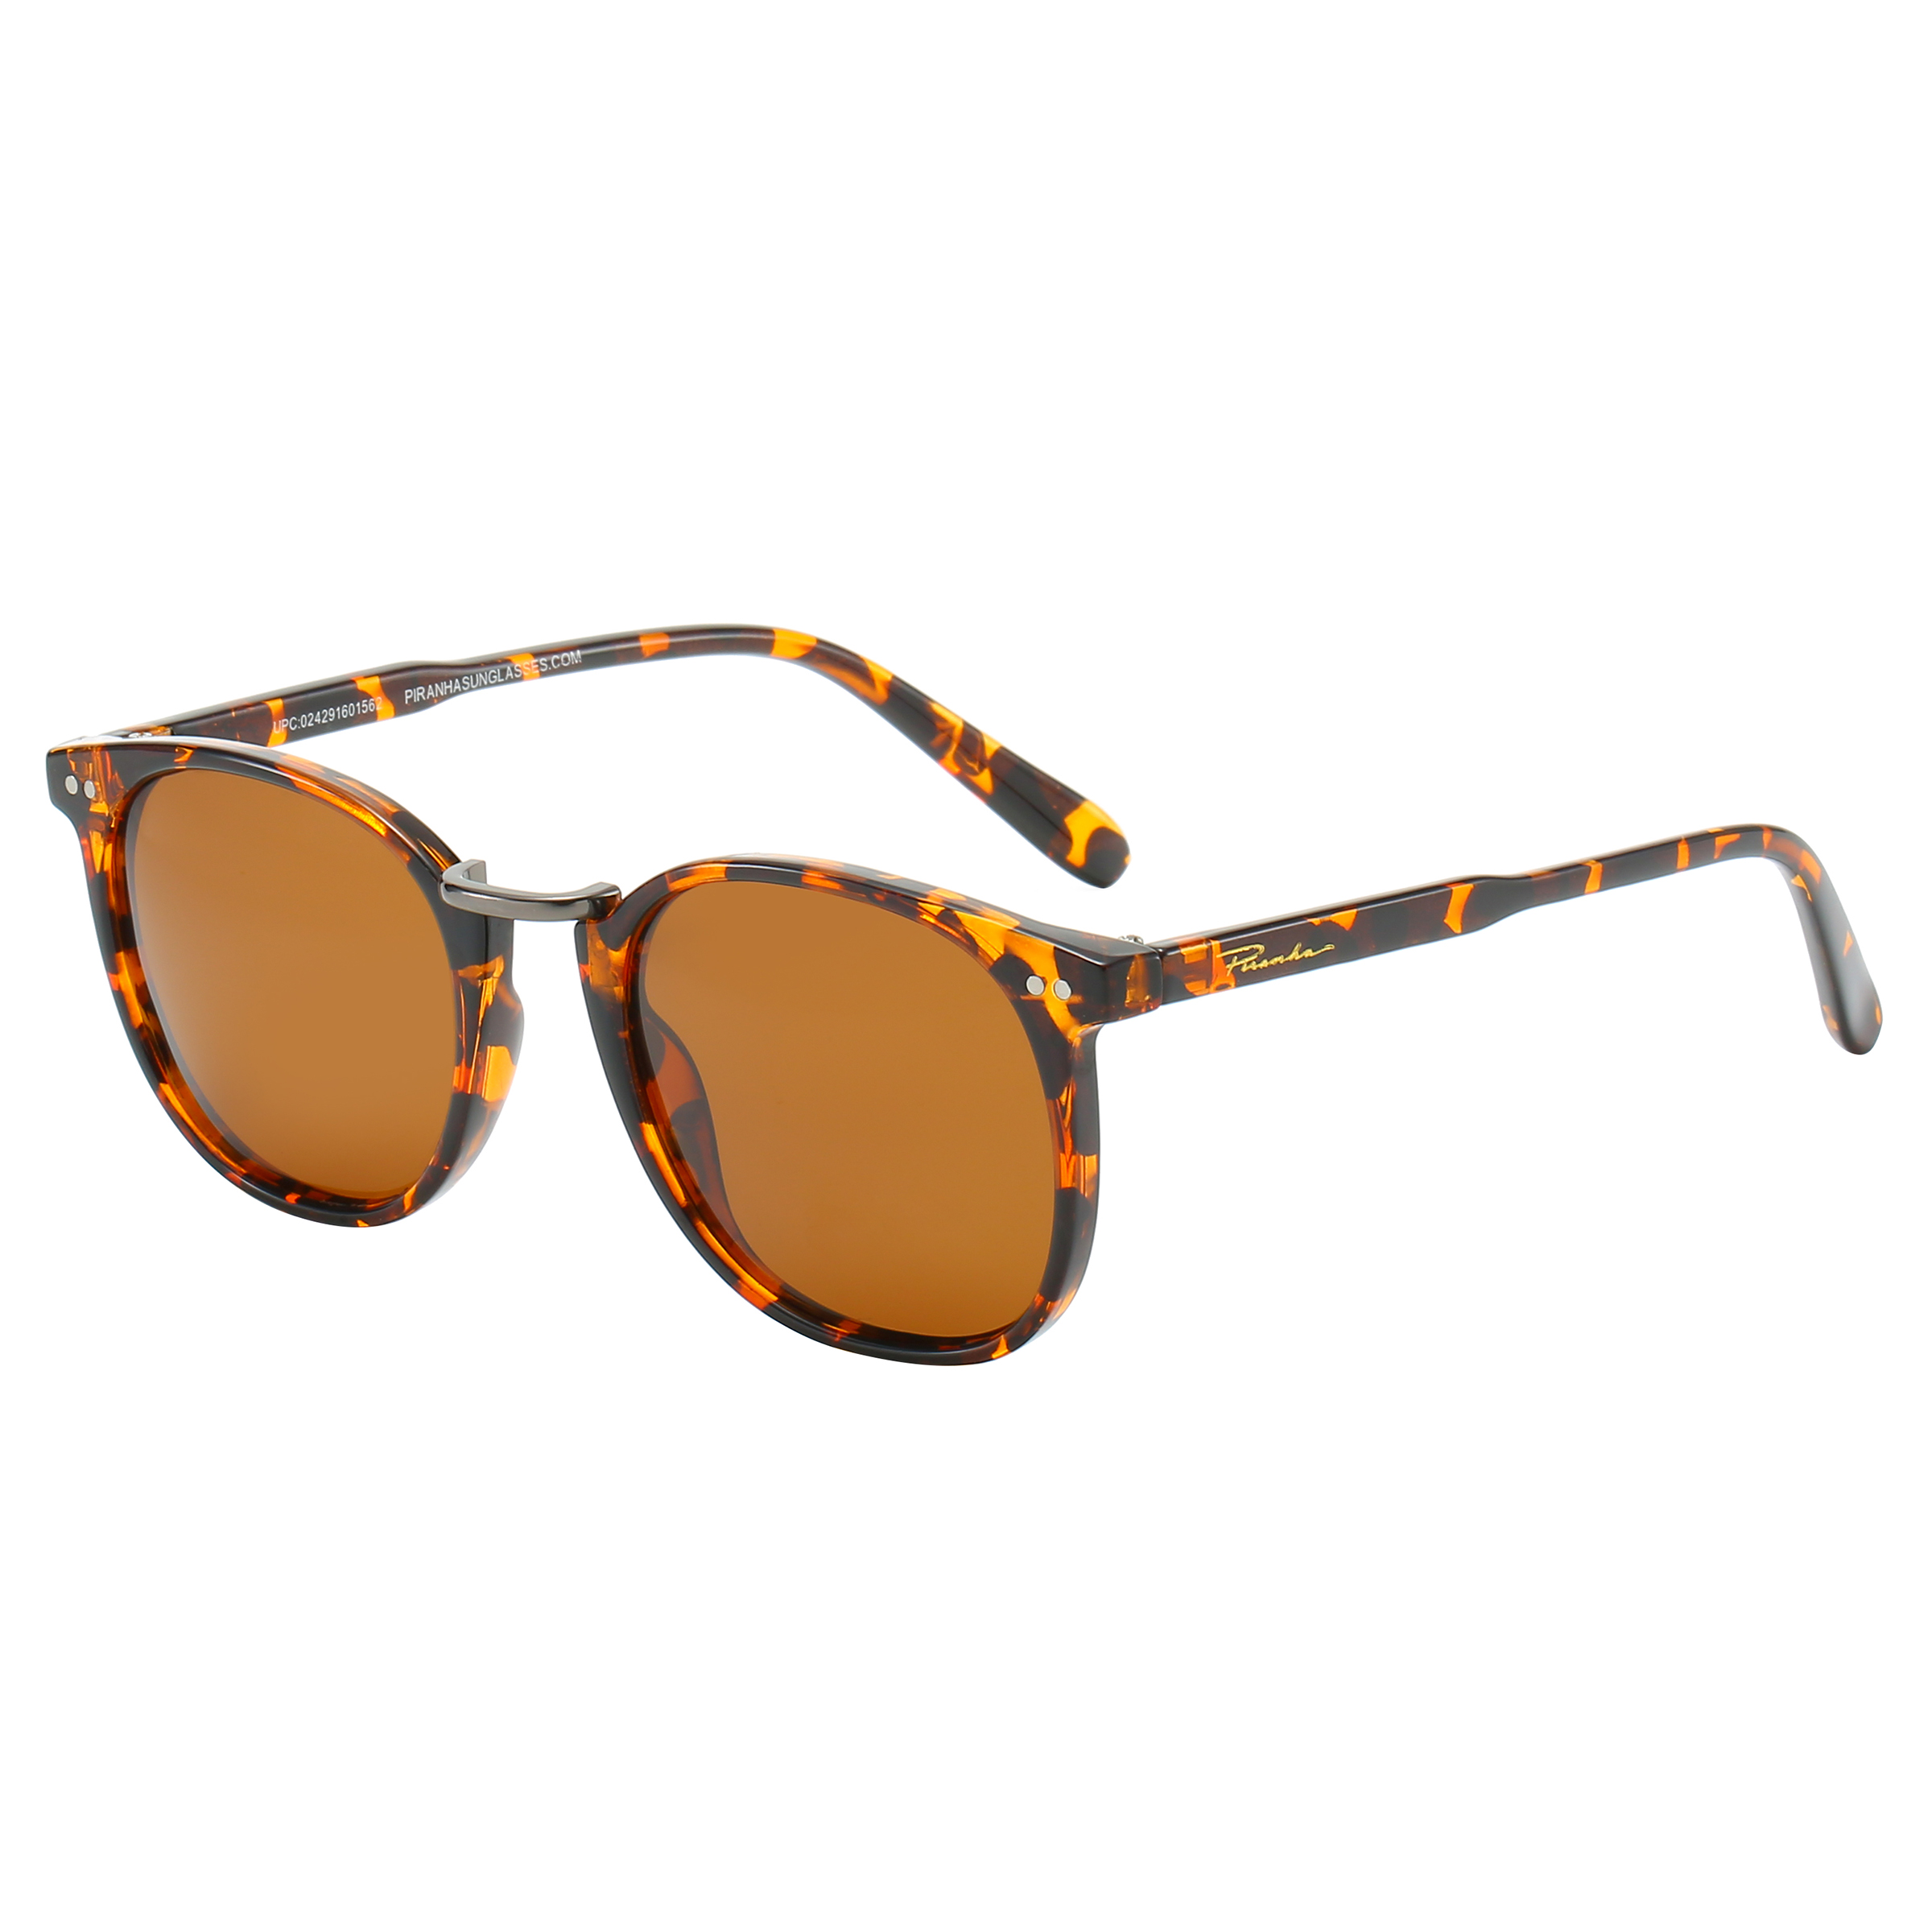 Piranha Eyewear Durado Round Demi Women's Sunglasses with Brown Polarized Lens - image 1 of 4